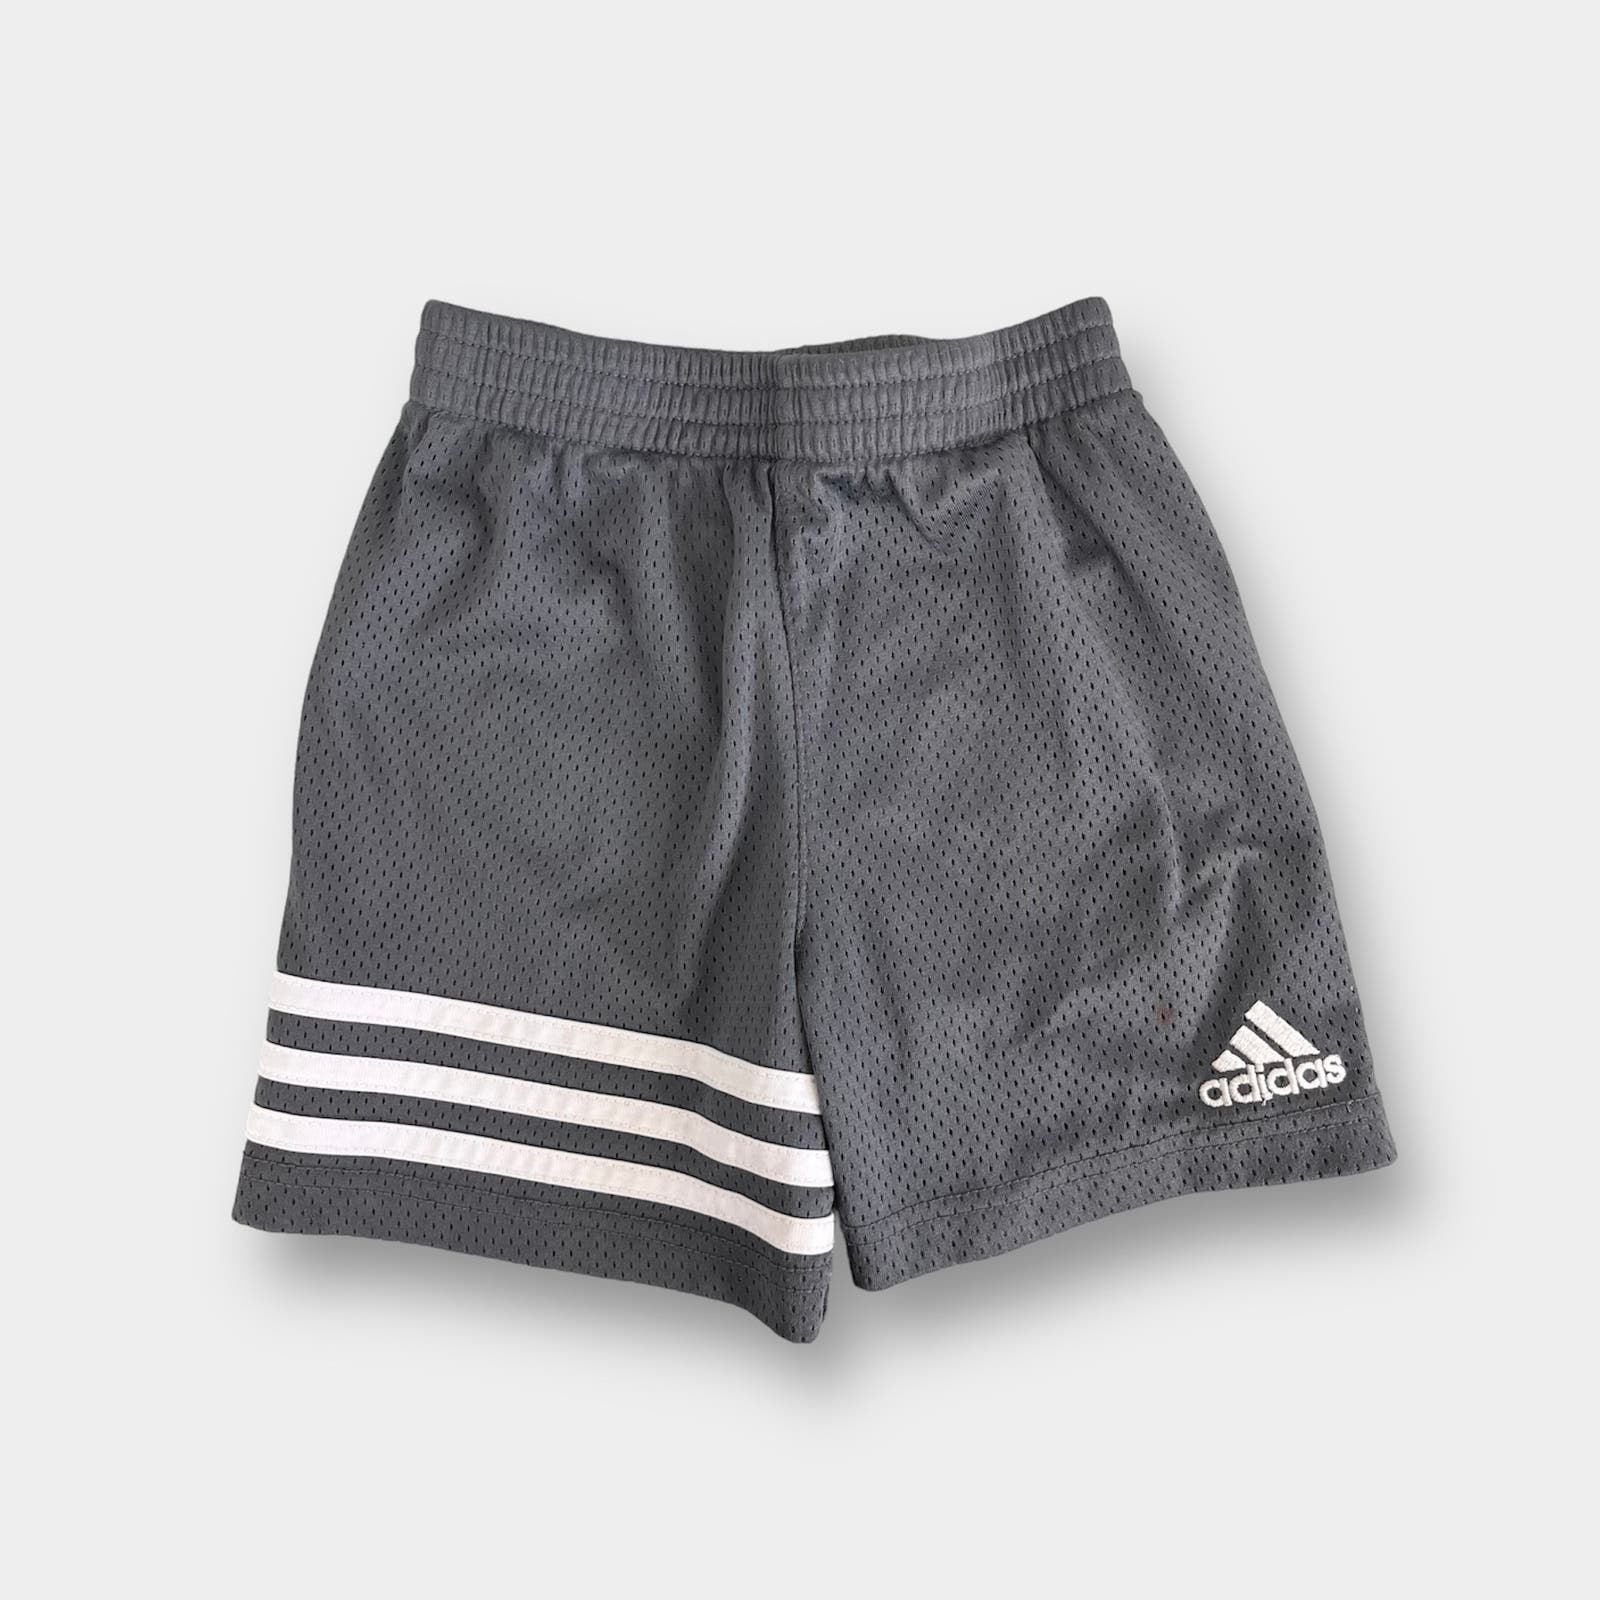 Adidas Gray Athletic Shorts 2T